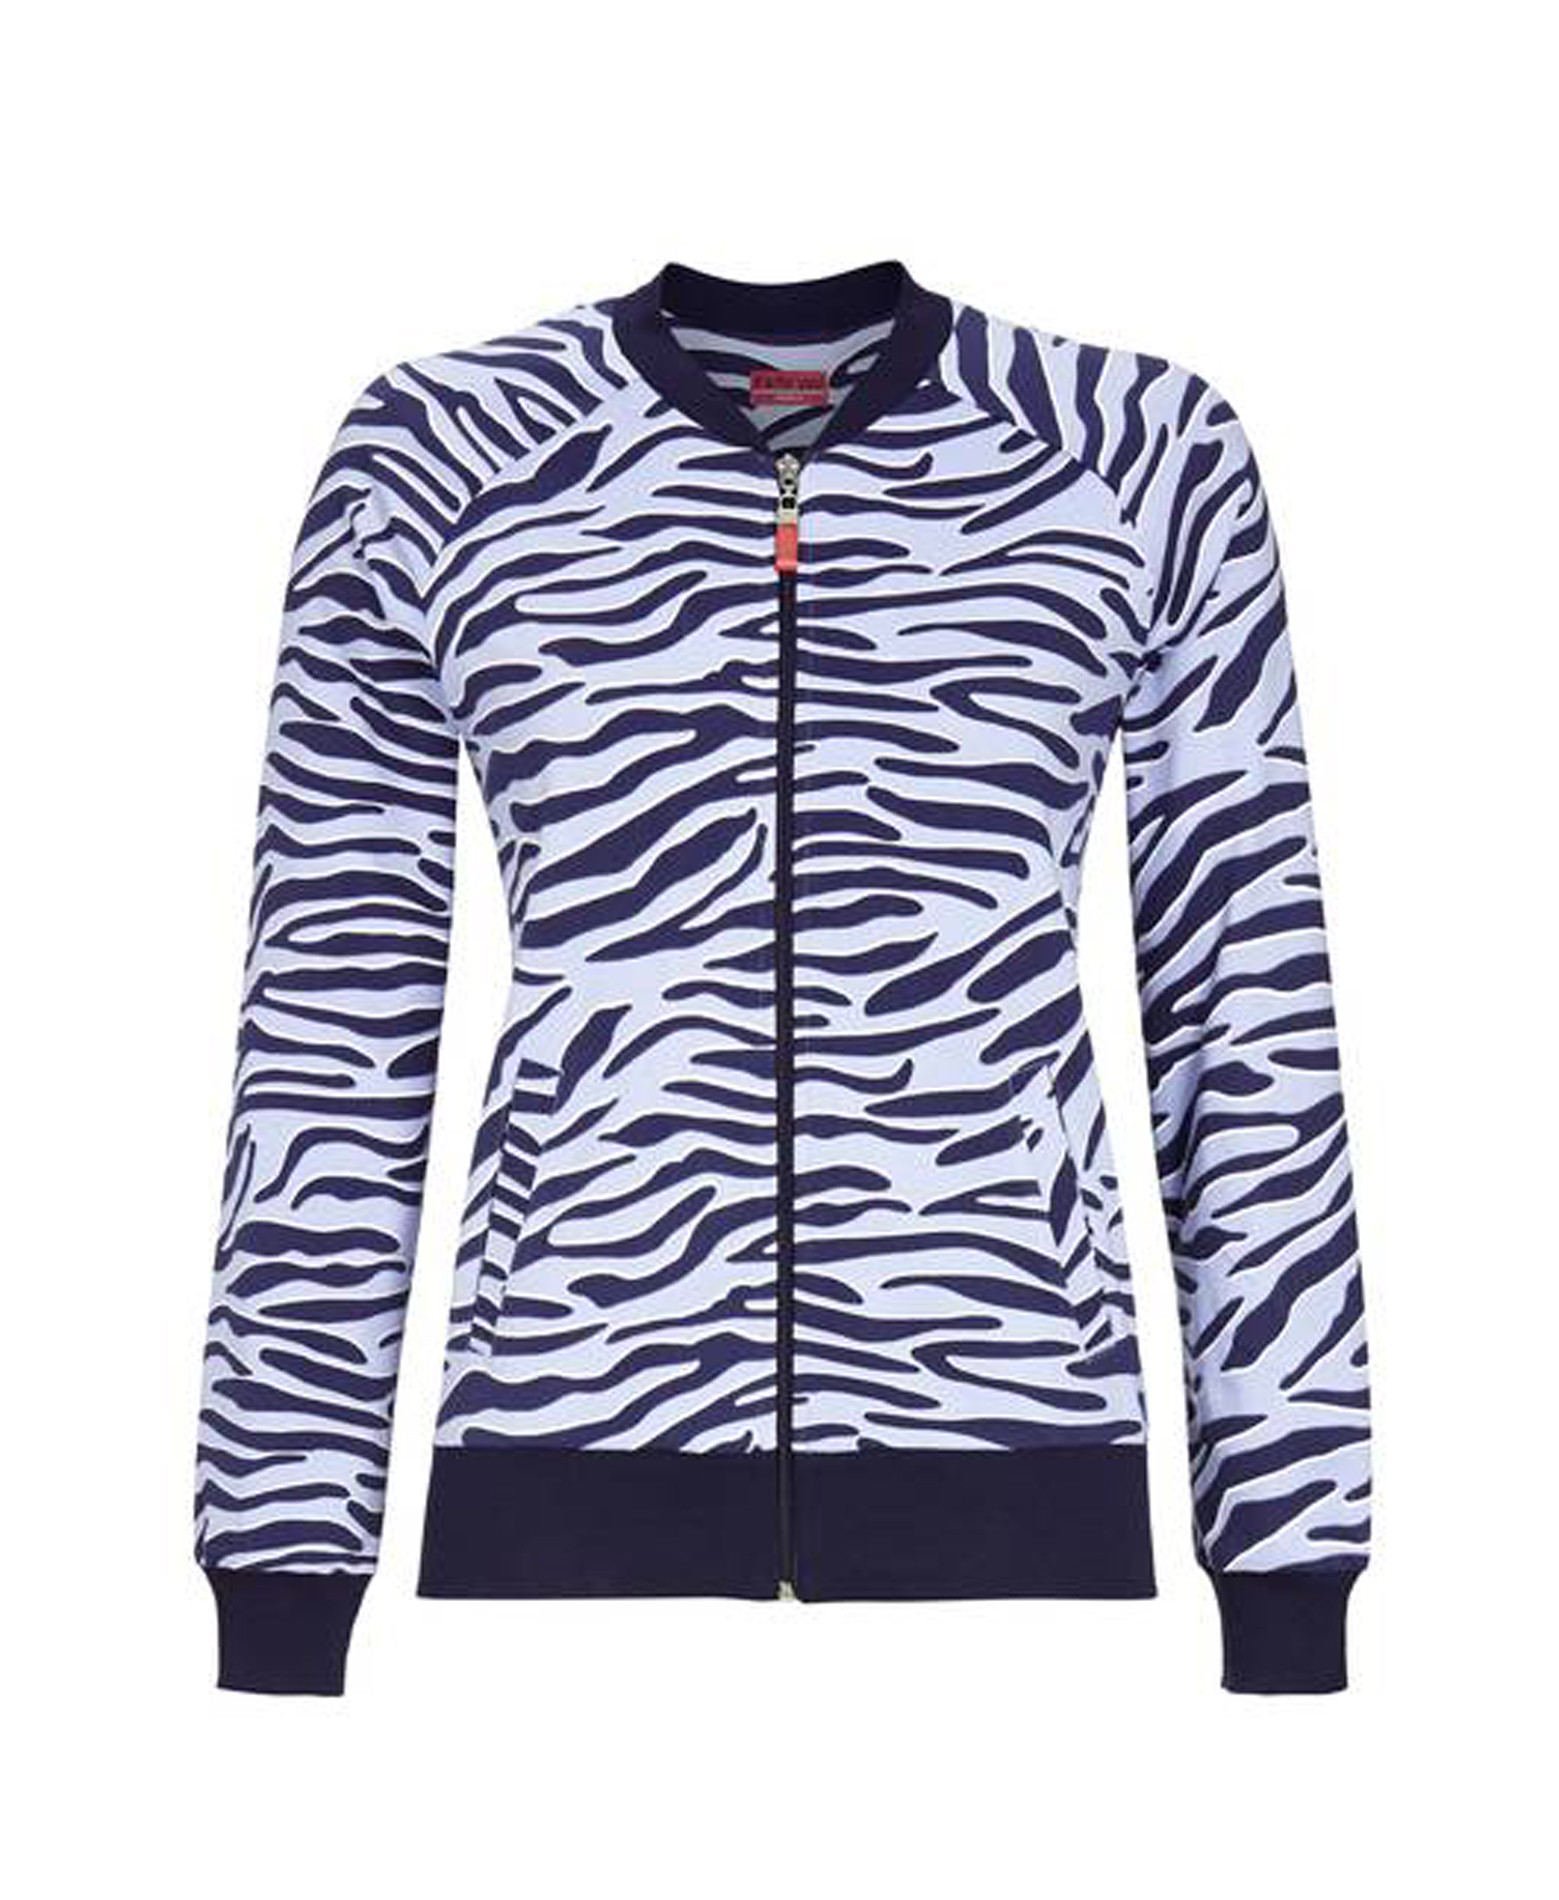 Ringella Damen Haus Jacke Baumwolle Elasthan Light Denim Tiger Homewear